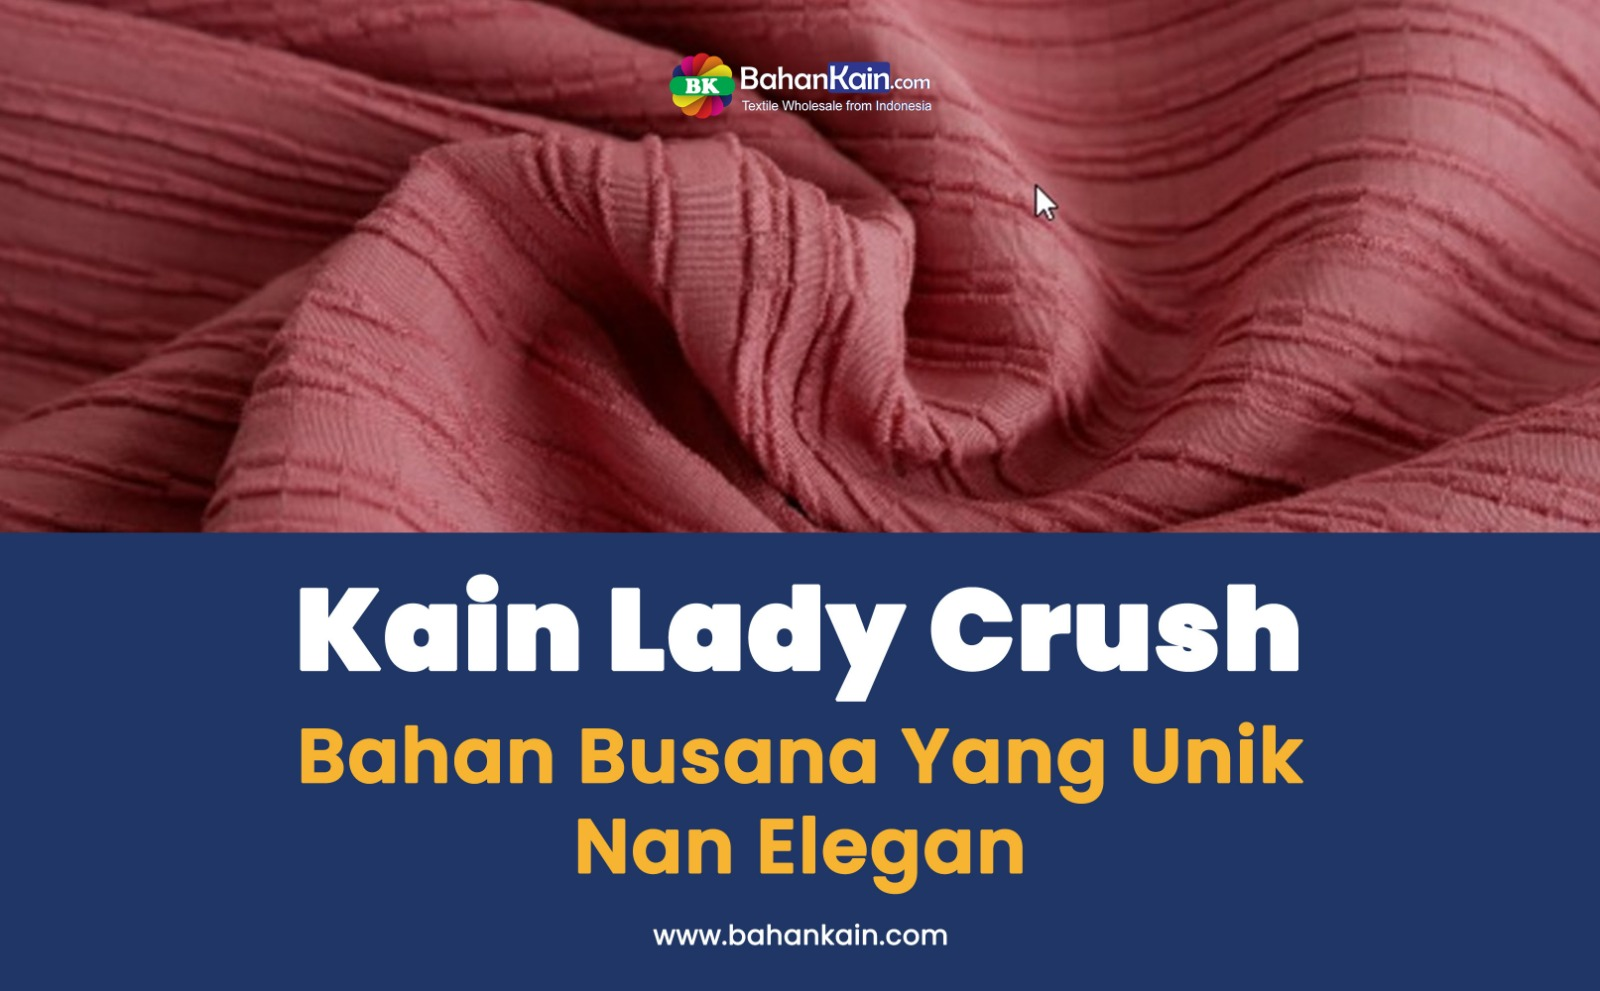 Kain Lady Crush, Bahan Busana Yang Unik Nan Elegan